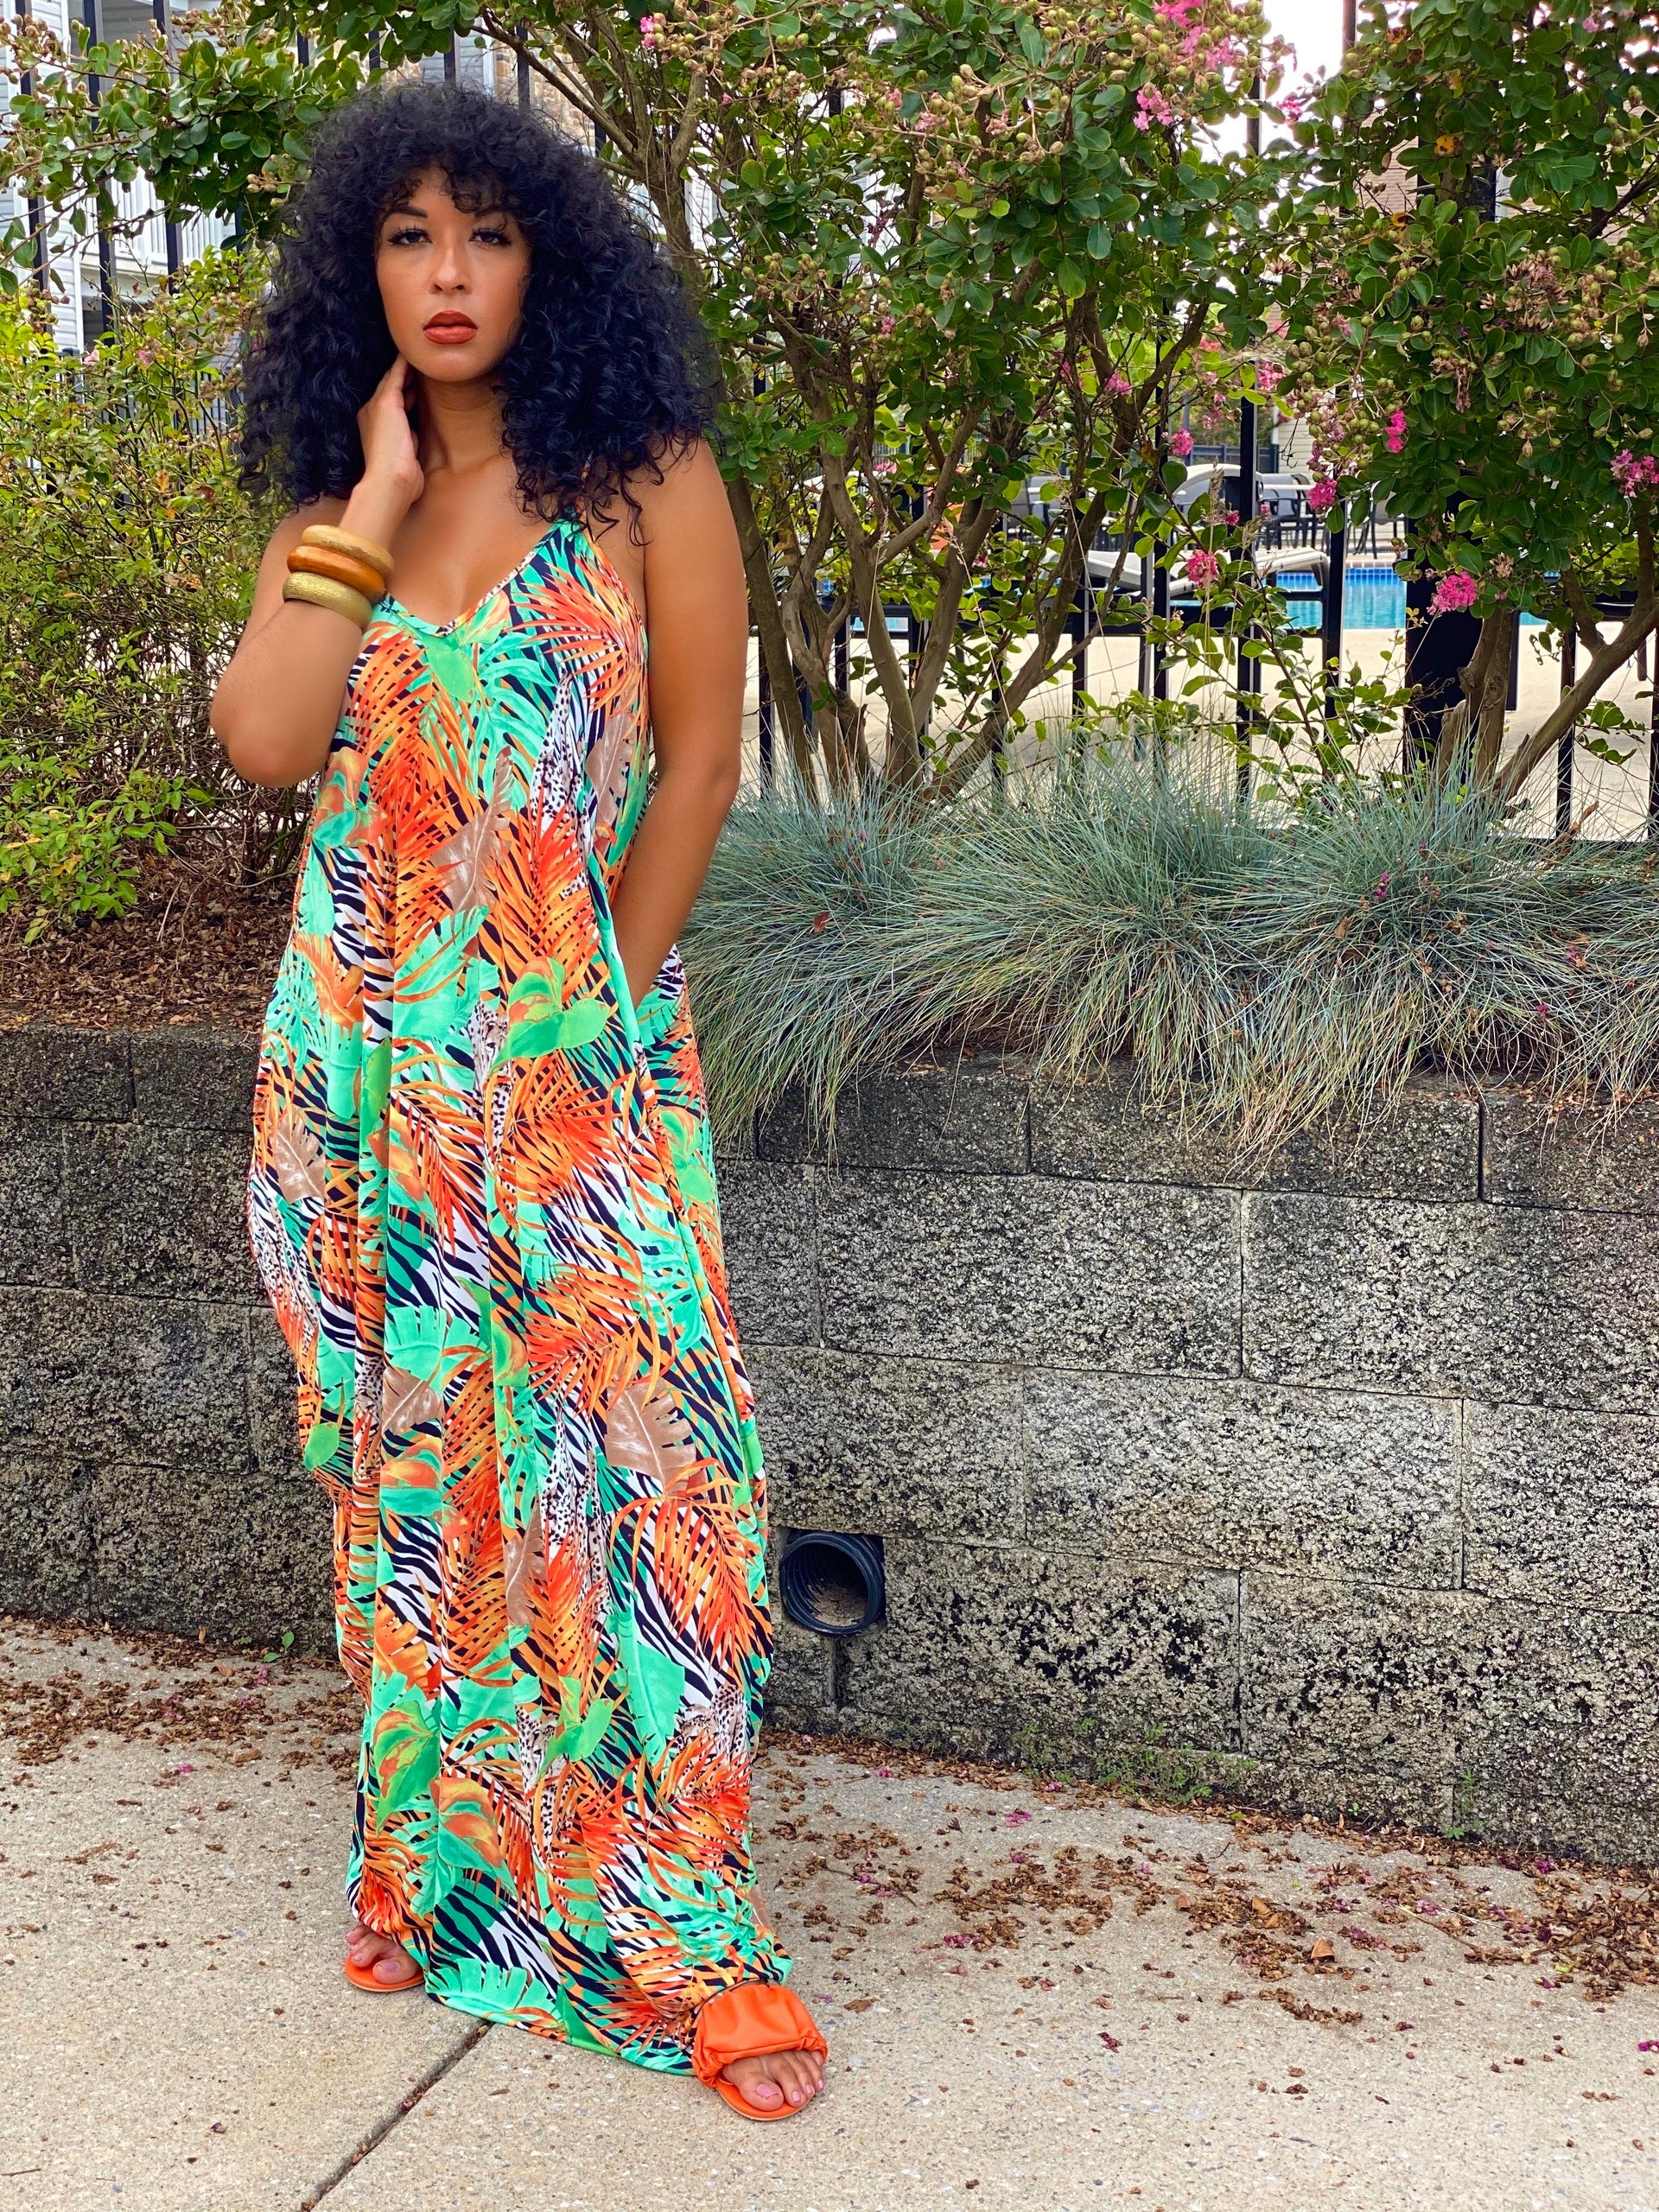 The “Jungle Girl” Dress